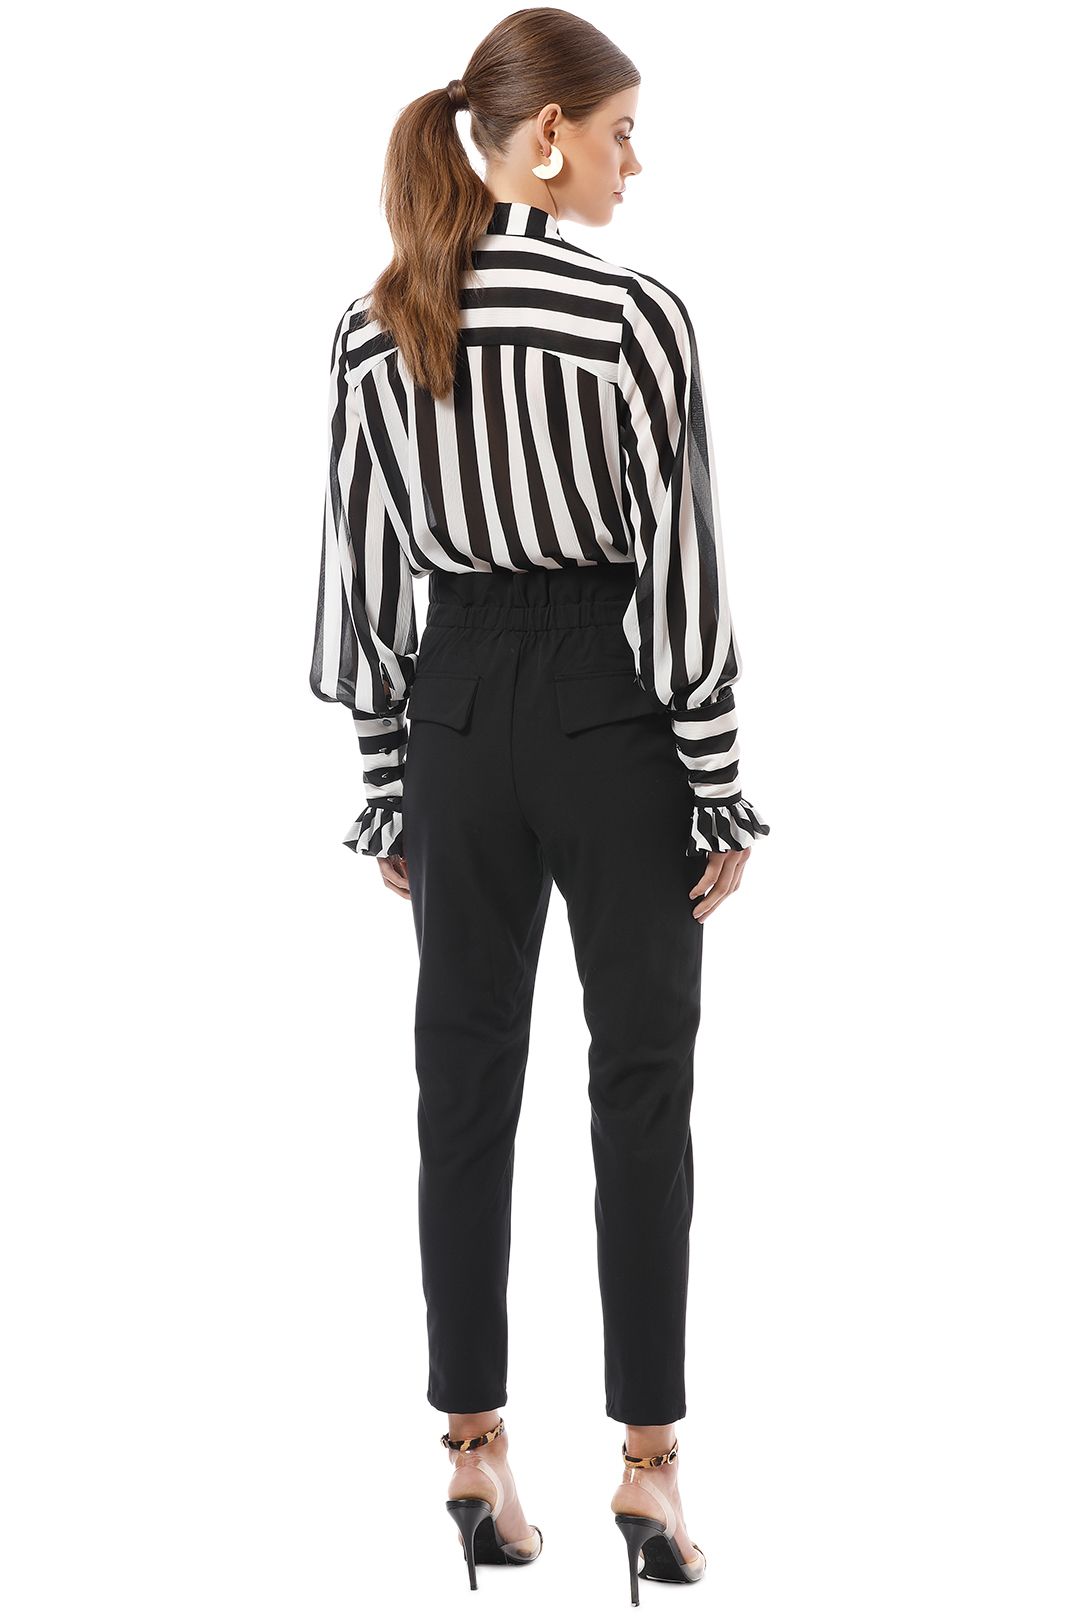 Cue - Bold Stripe Crinkle Georgette Shirt - Black White - Back